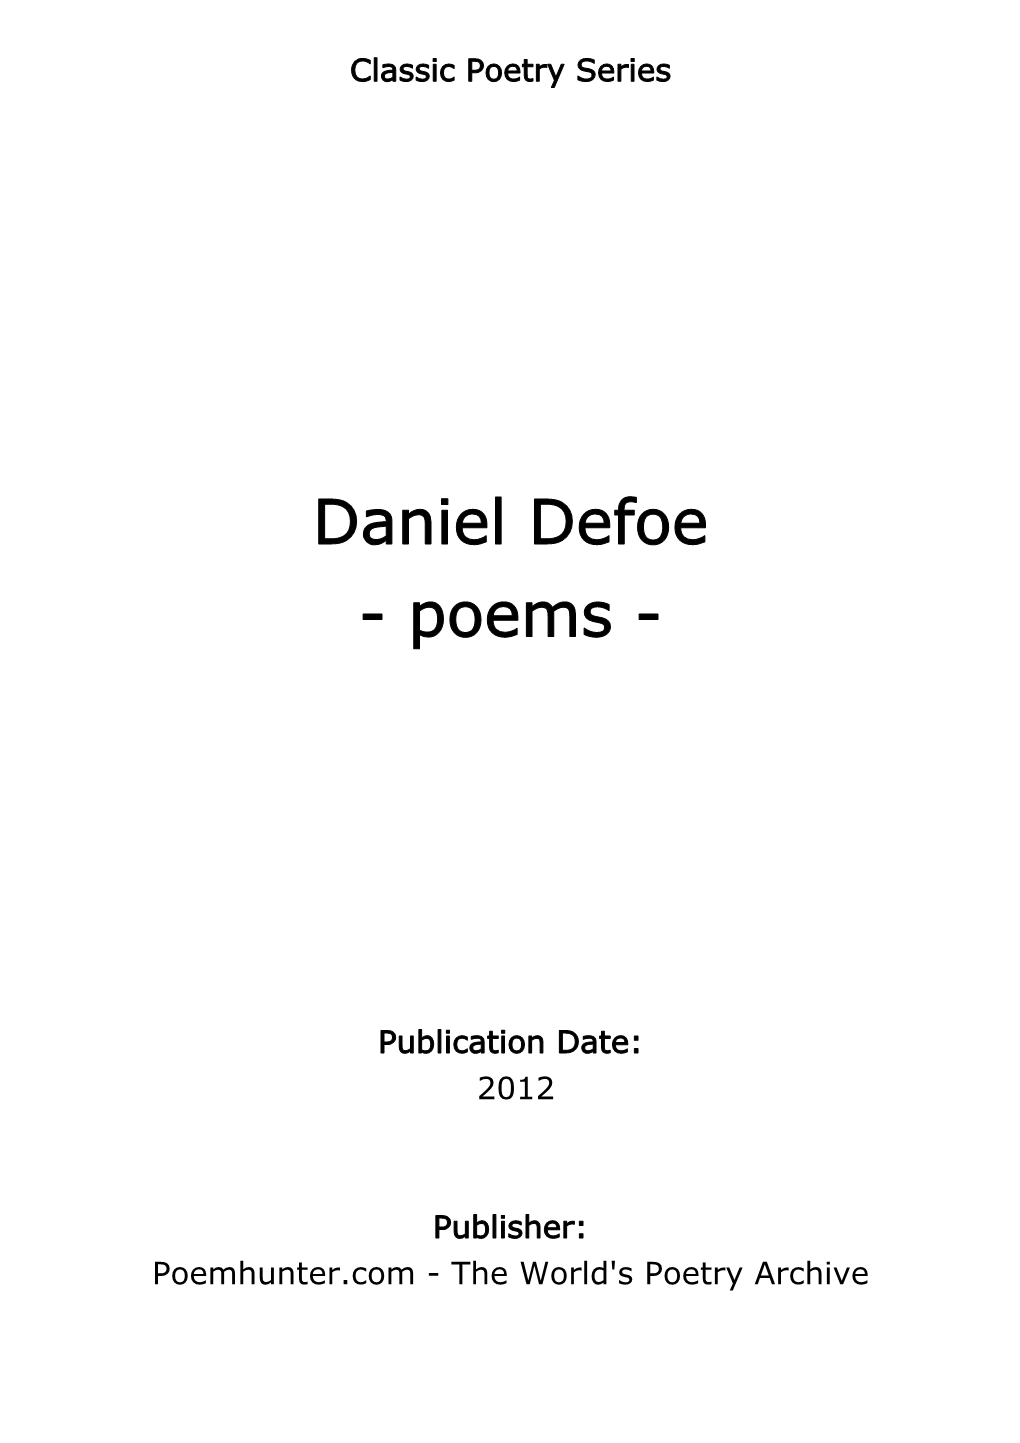 Daniel Defoe - Poems